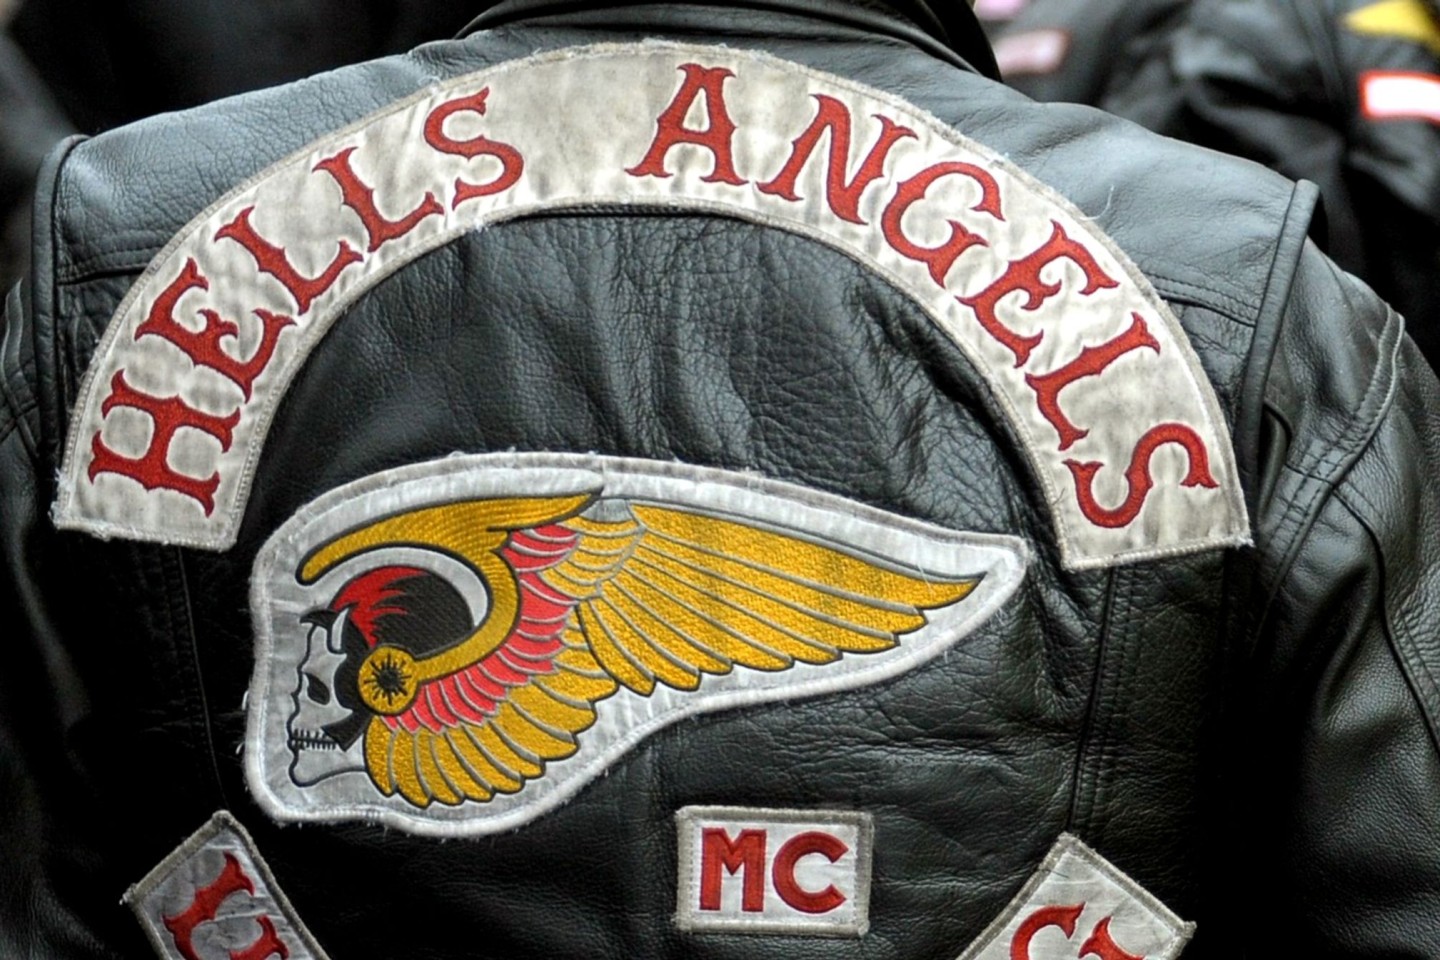 «Hells Angels»-Kutte in Kaiserslautern. (Symbolbild)